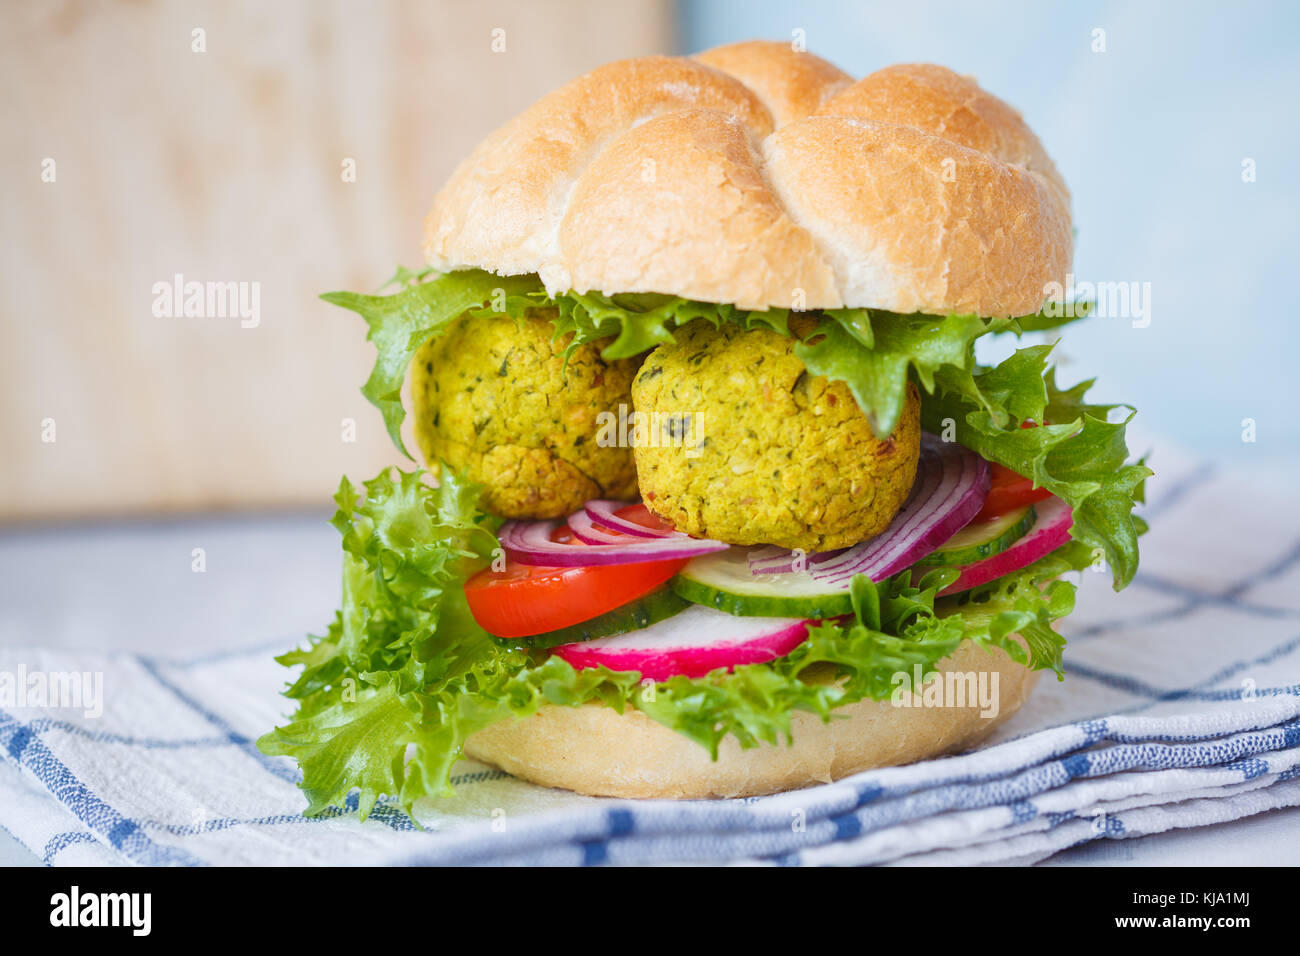 Vegan falafel burger with vegetables. Vegan Healthy Food Concept. Stock Photo